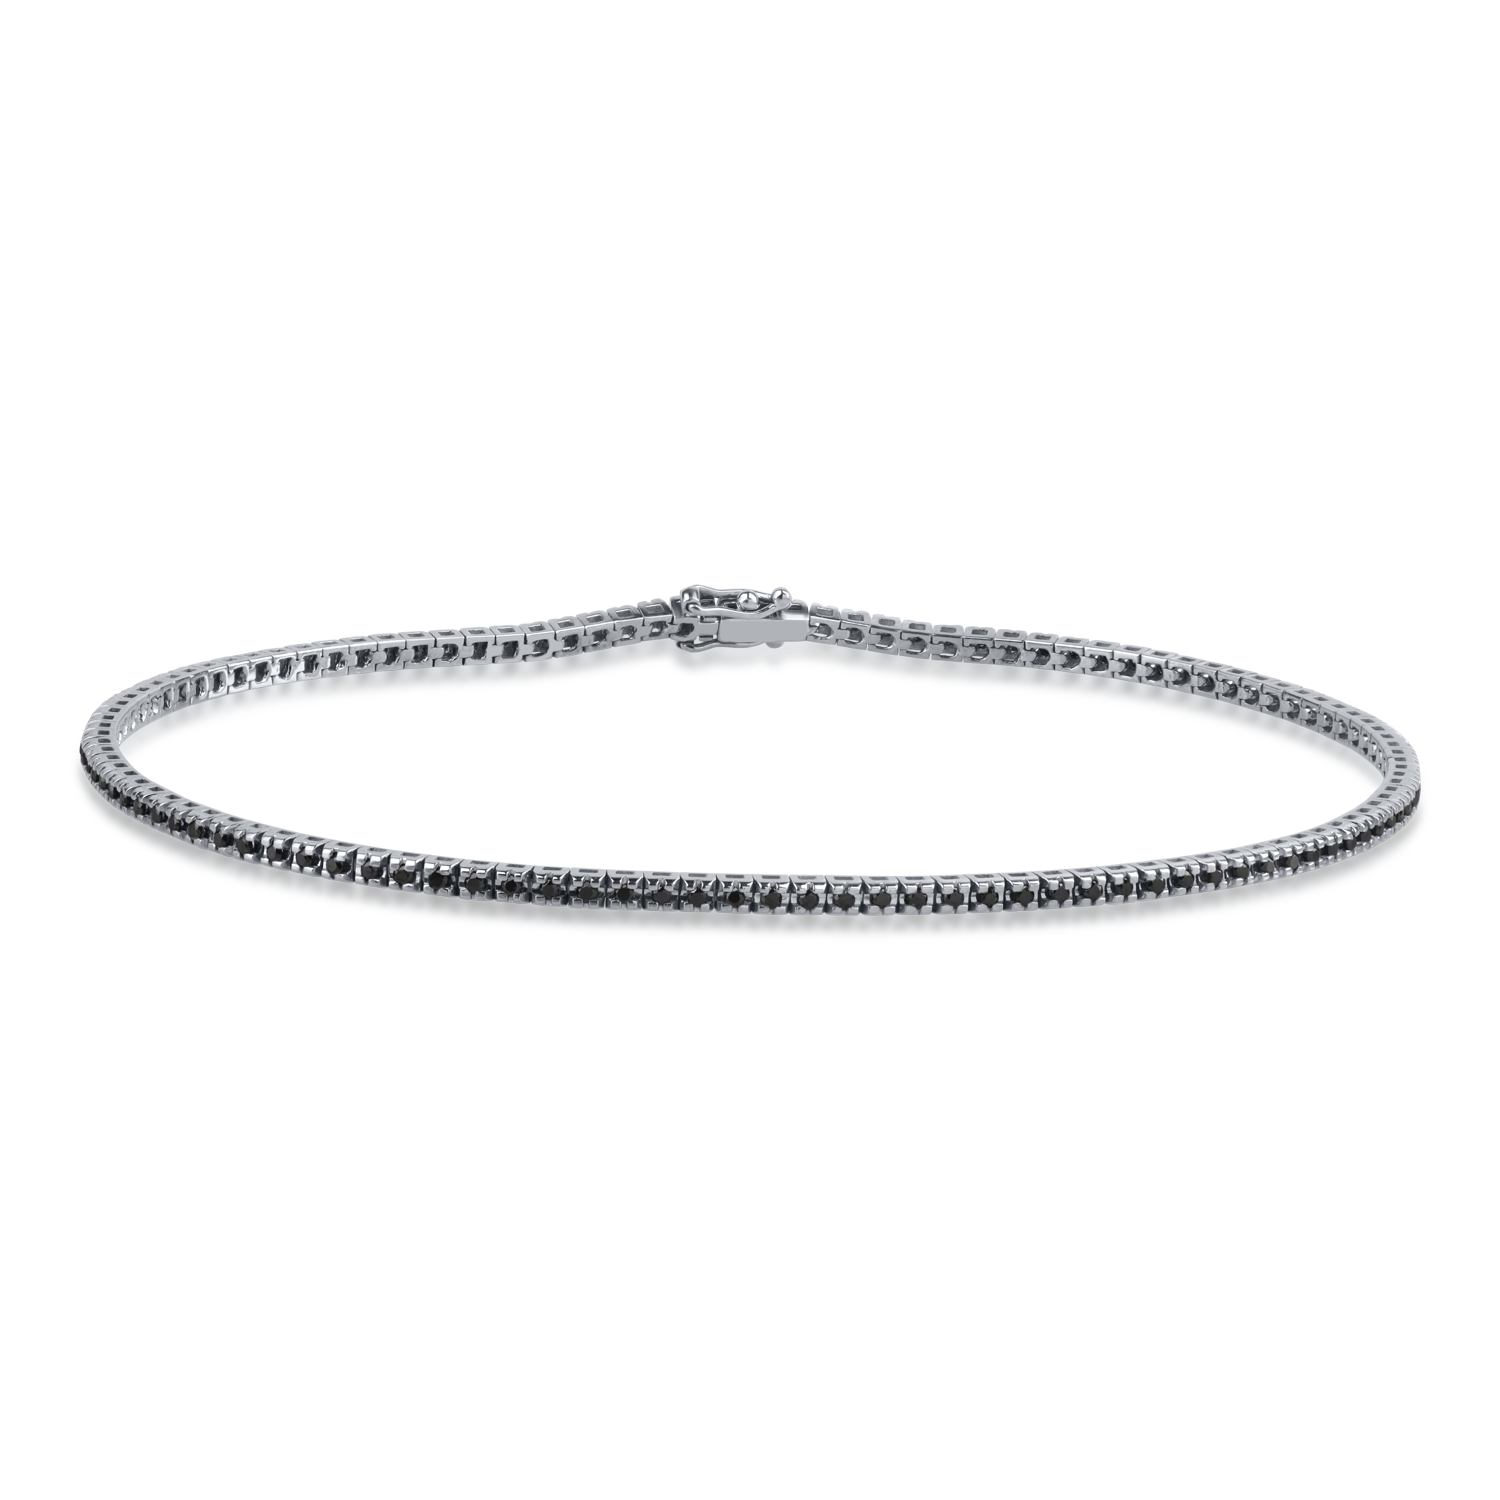 White gold tennis bracelet with 0.60ct black diamonds